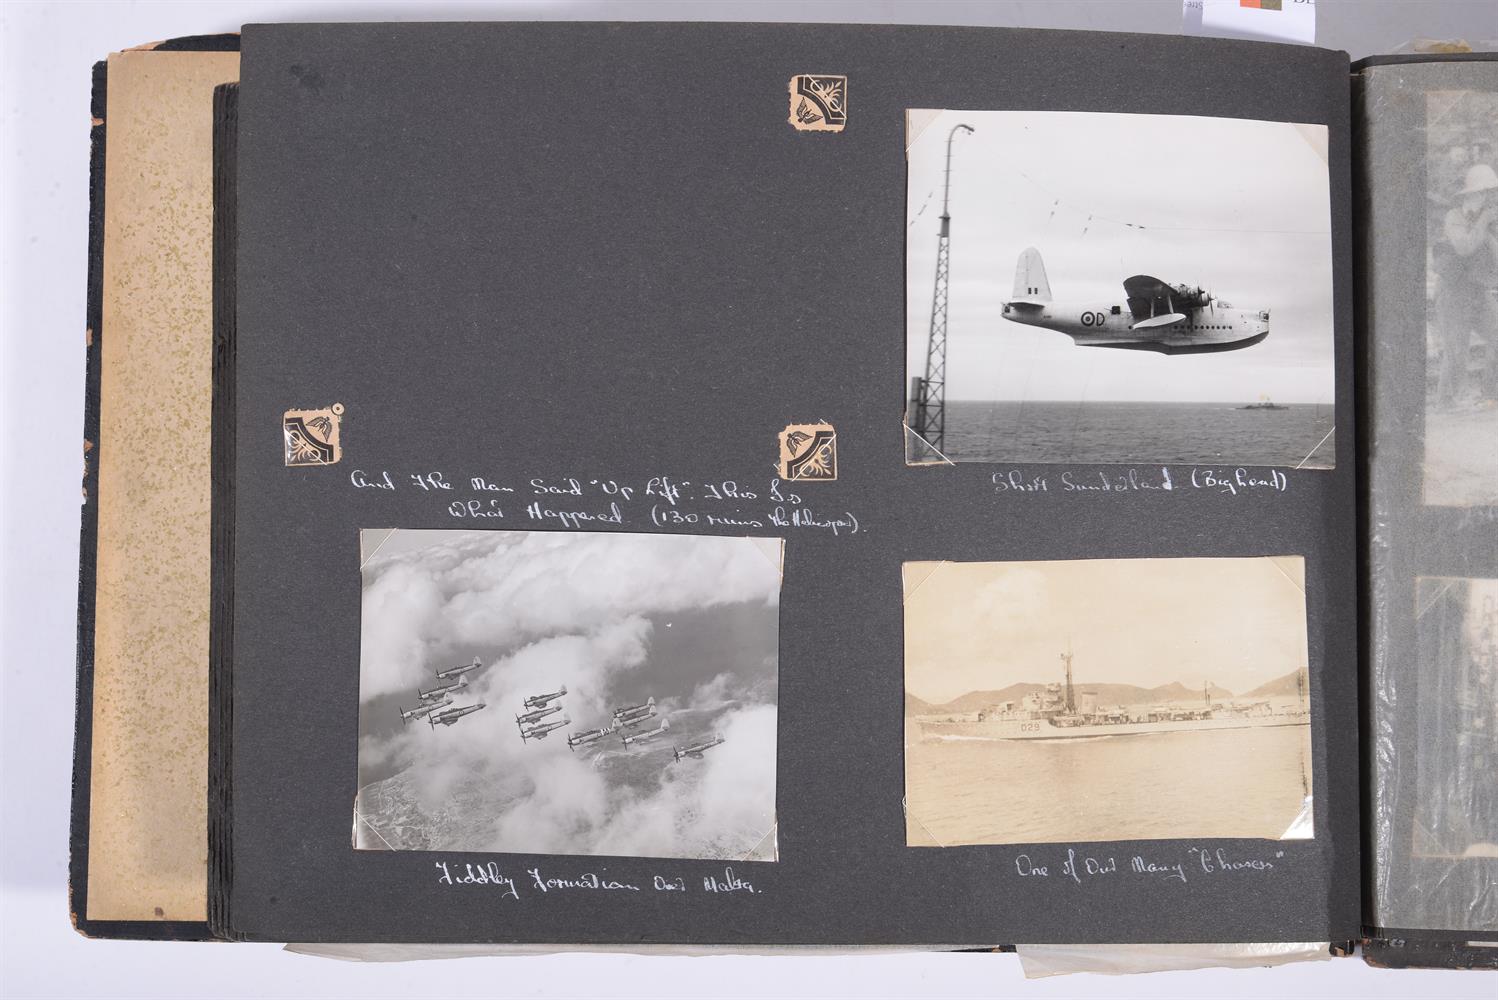 ALBUM: An album of over 100 photographs, Malta, Yemen, Hong Kong, Korea, (1951-53). - Image 4 of 5